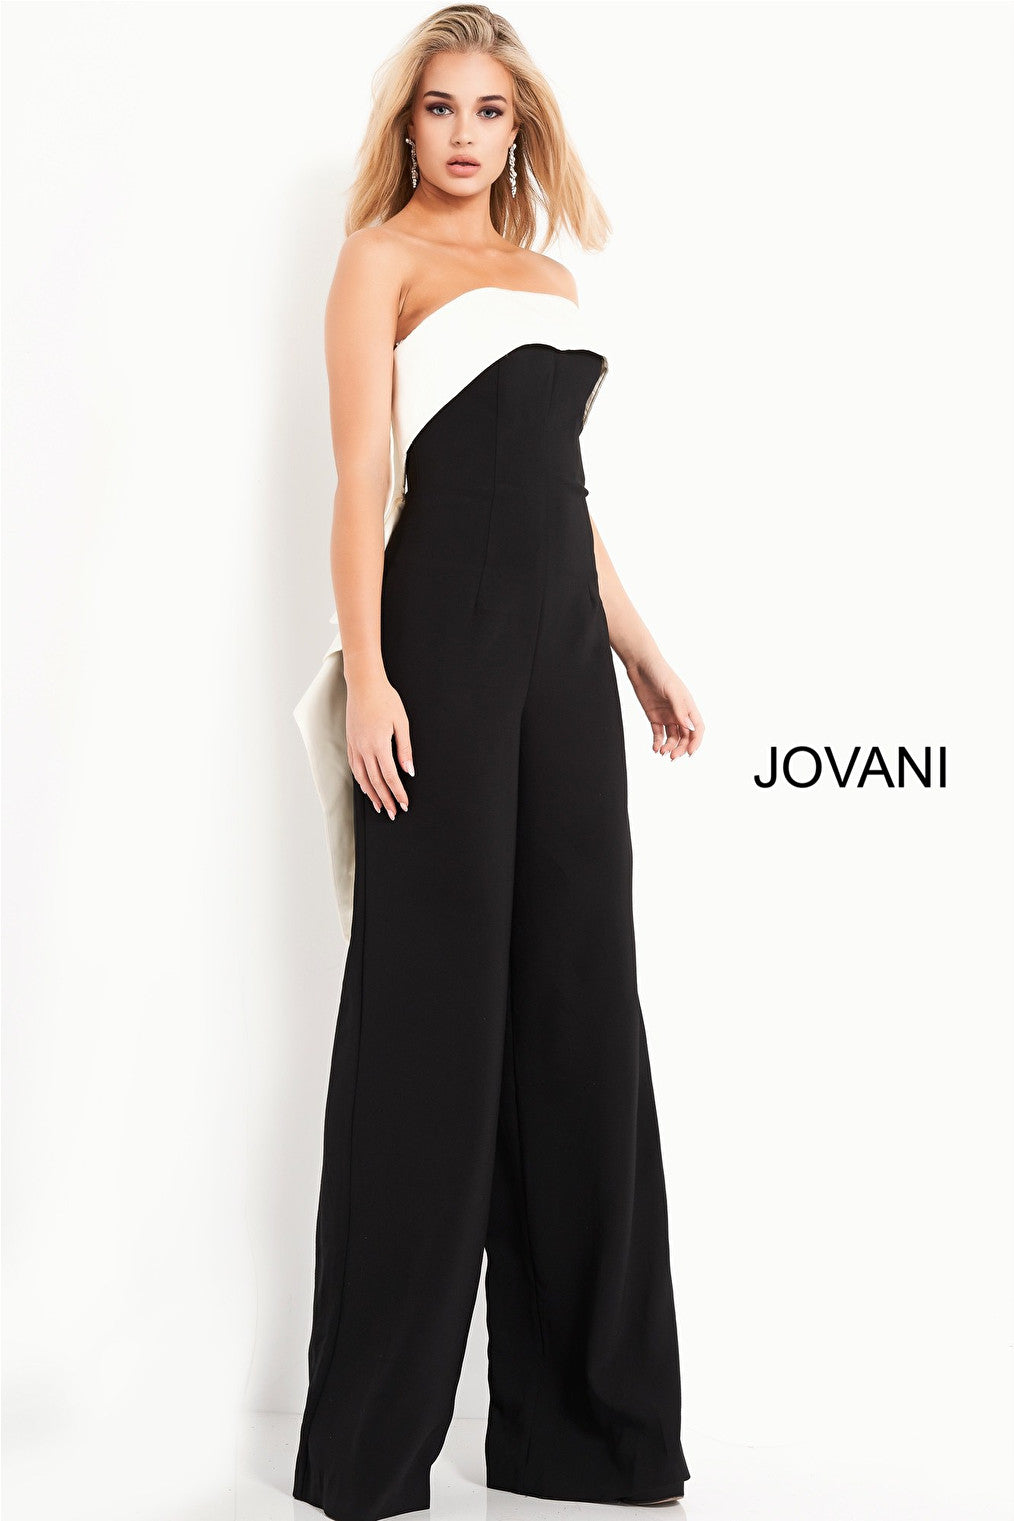 Jovani 04355 Black Ivory Strapless Evening jumpsuit